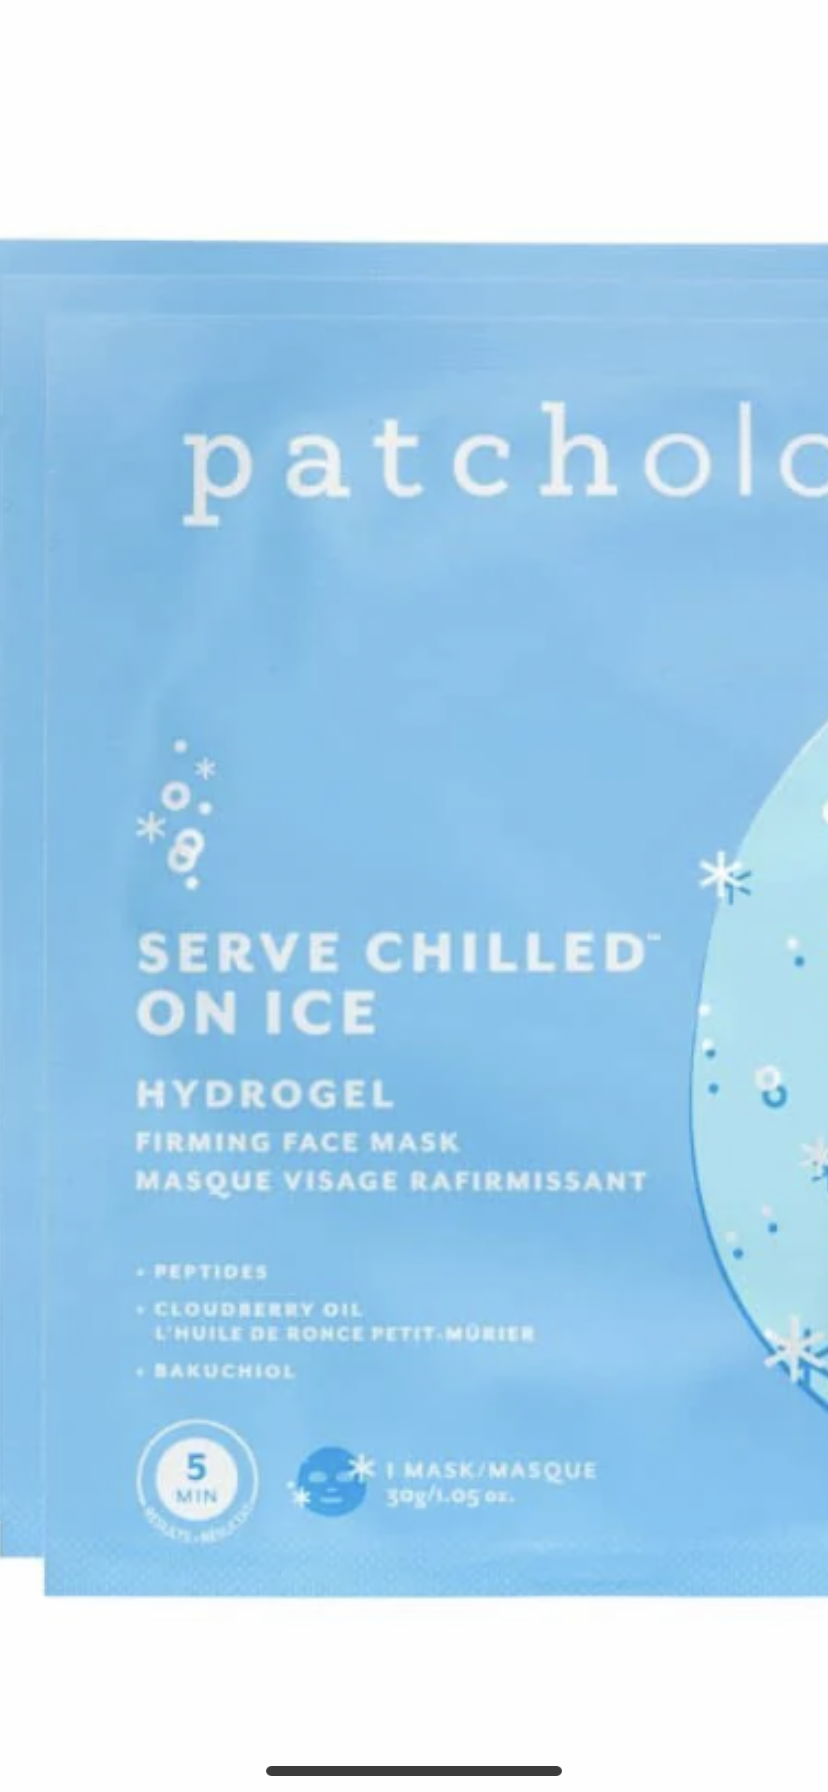 On Ice Hydrogel Mask